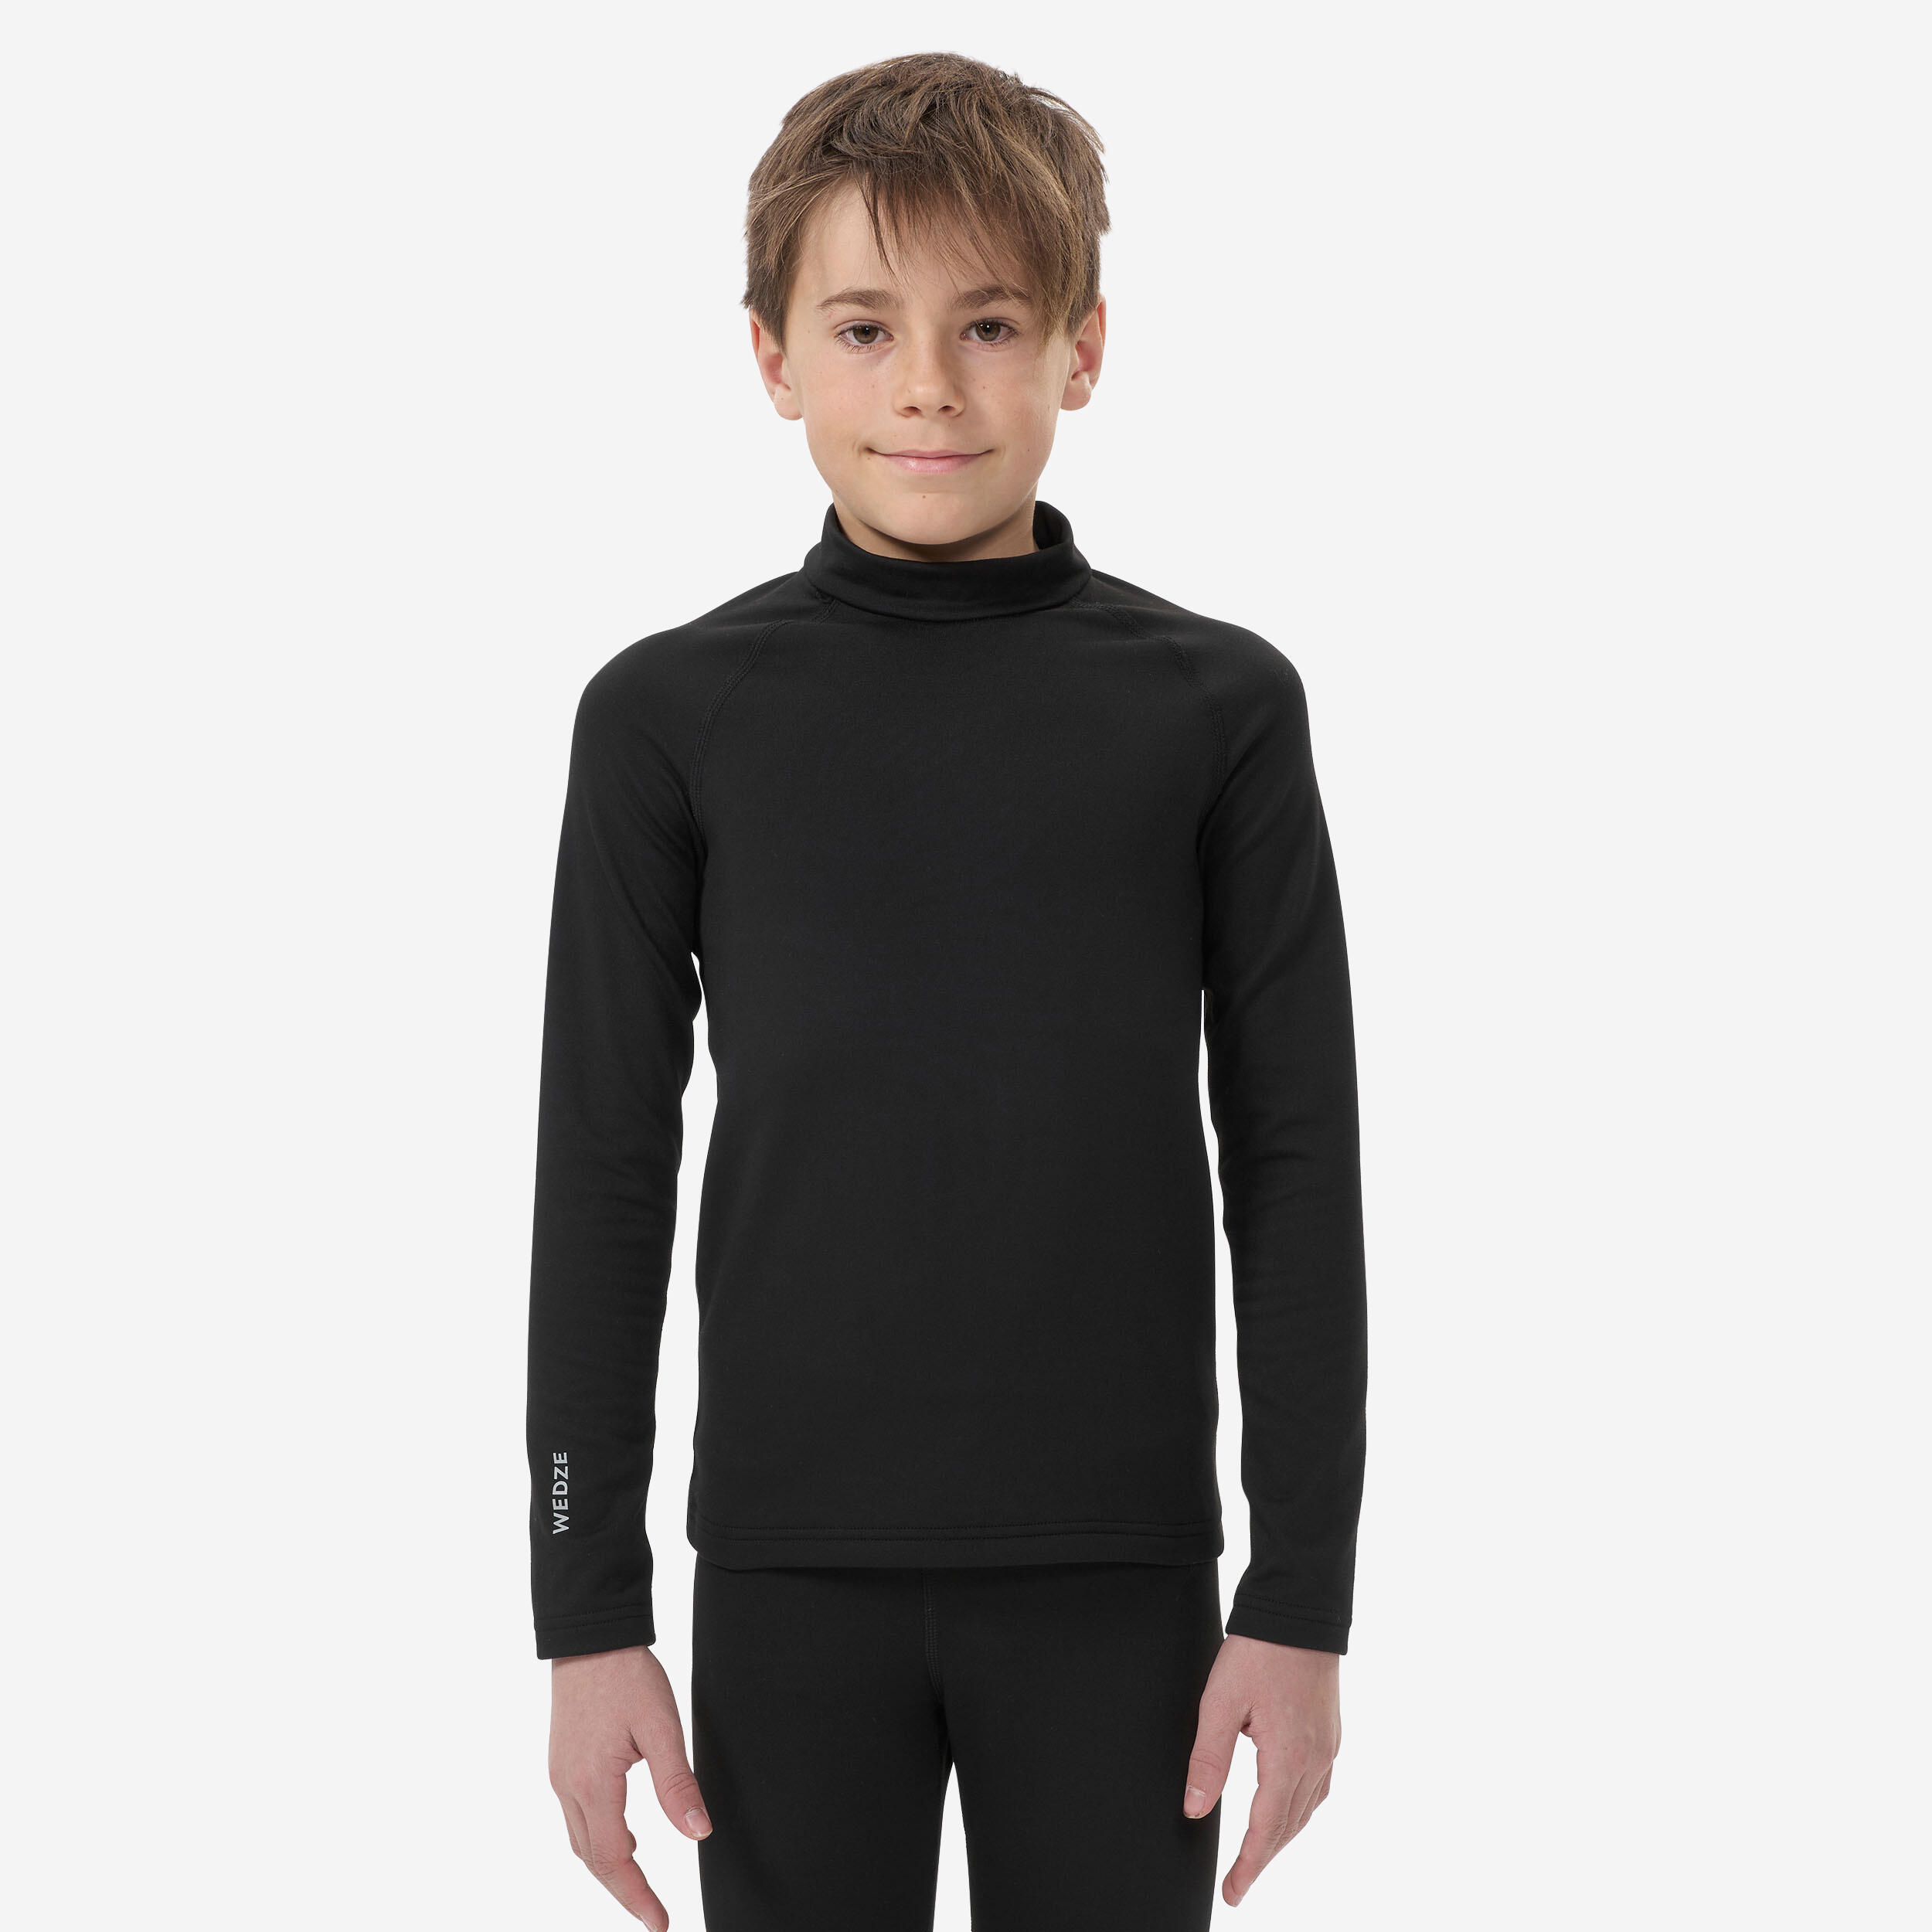 Kids' thermal ski base layer top - BL500 - black WEDZE